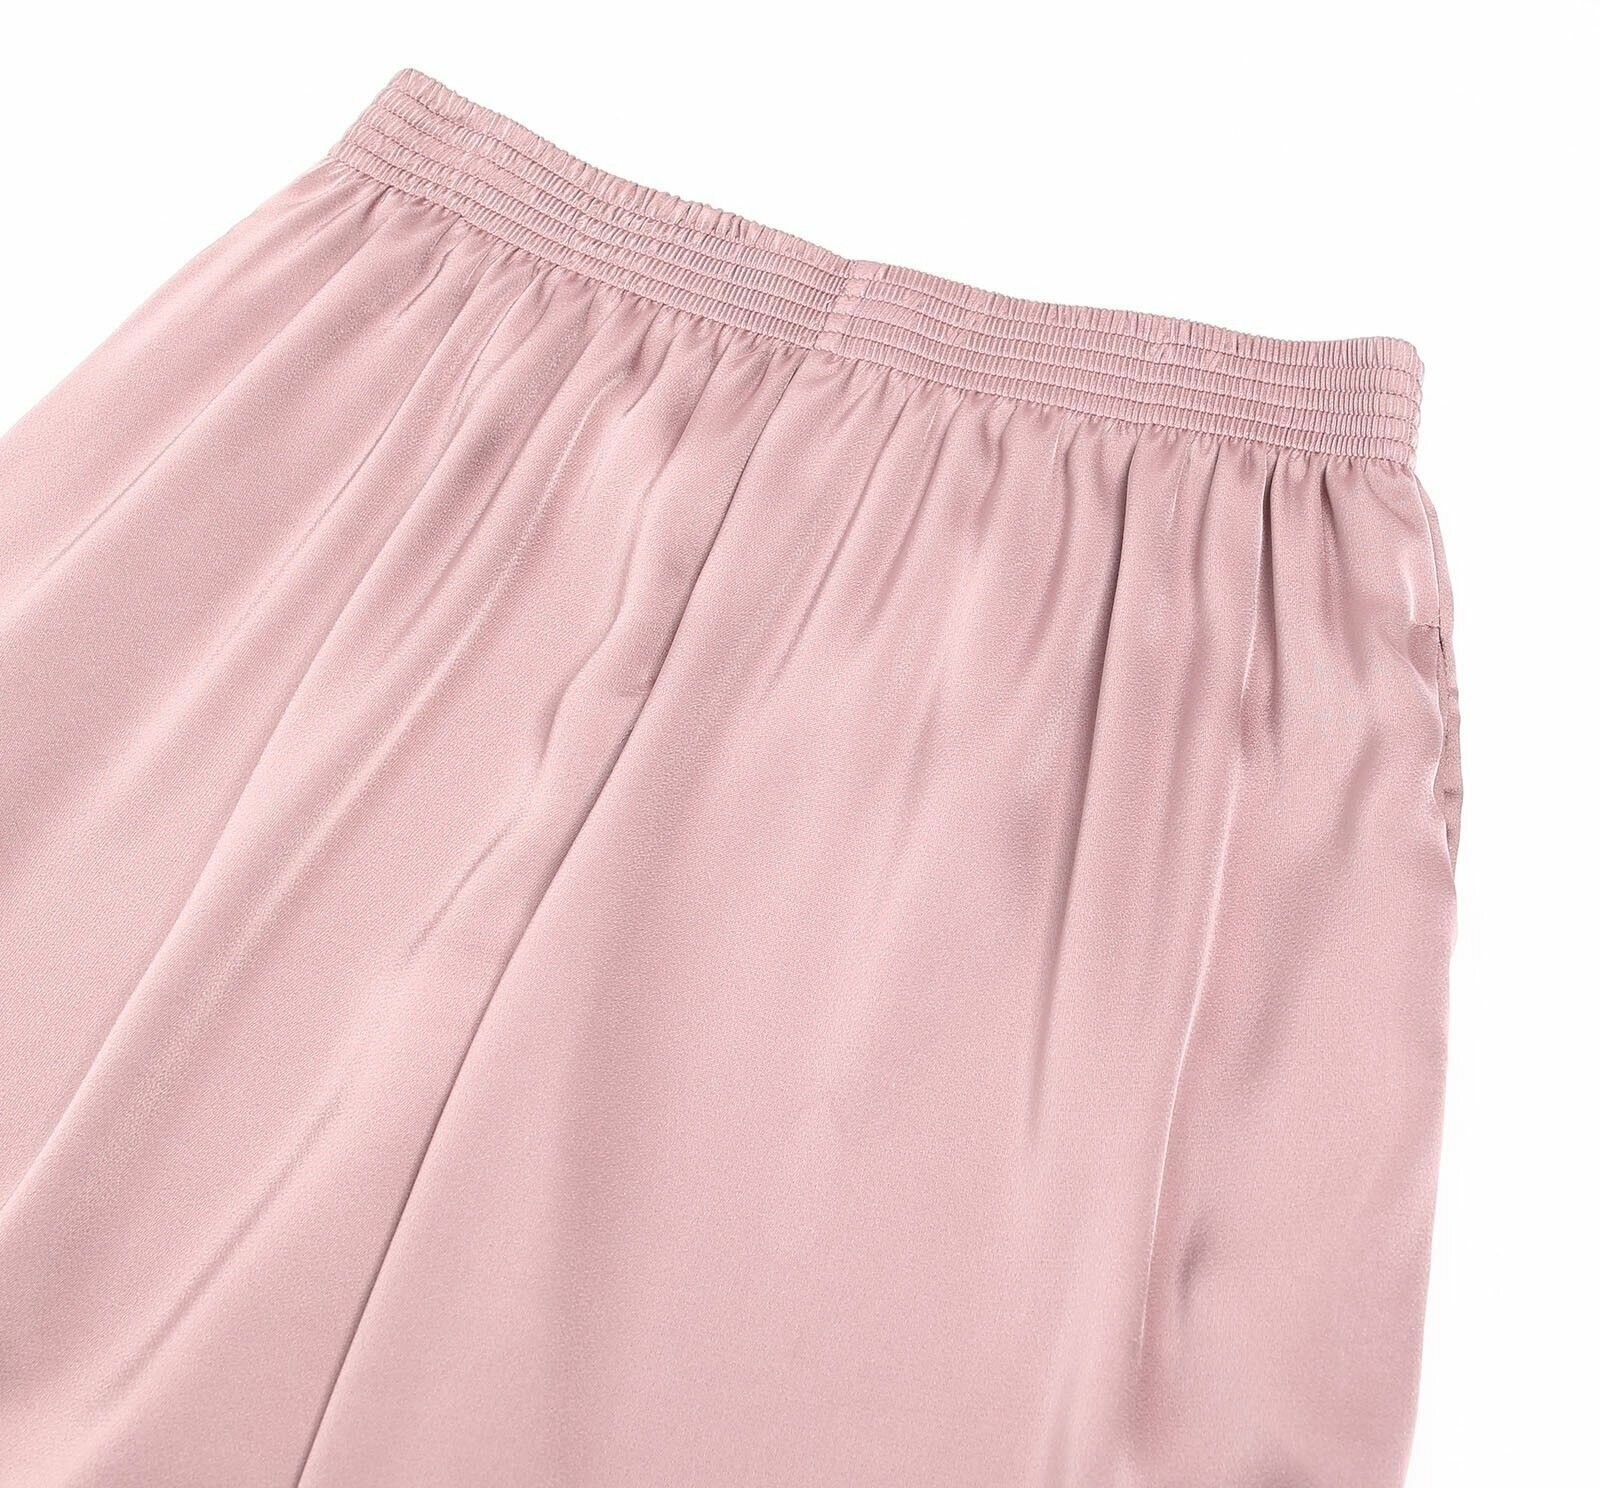 MINAKU Комплект (сорочка, брюки) женский MINAKU: Light touch цвет темно-розовый, р-р 54 - фотография № 13